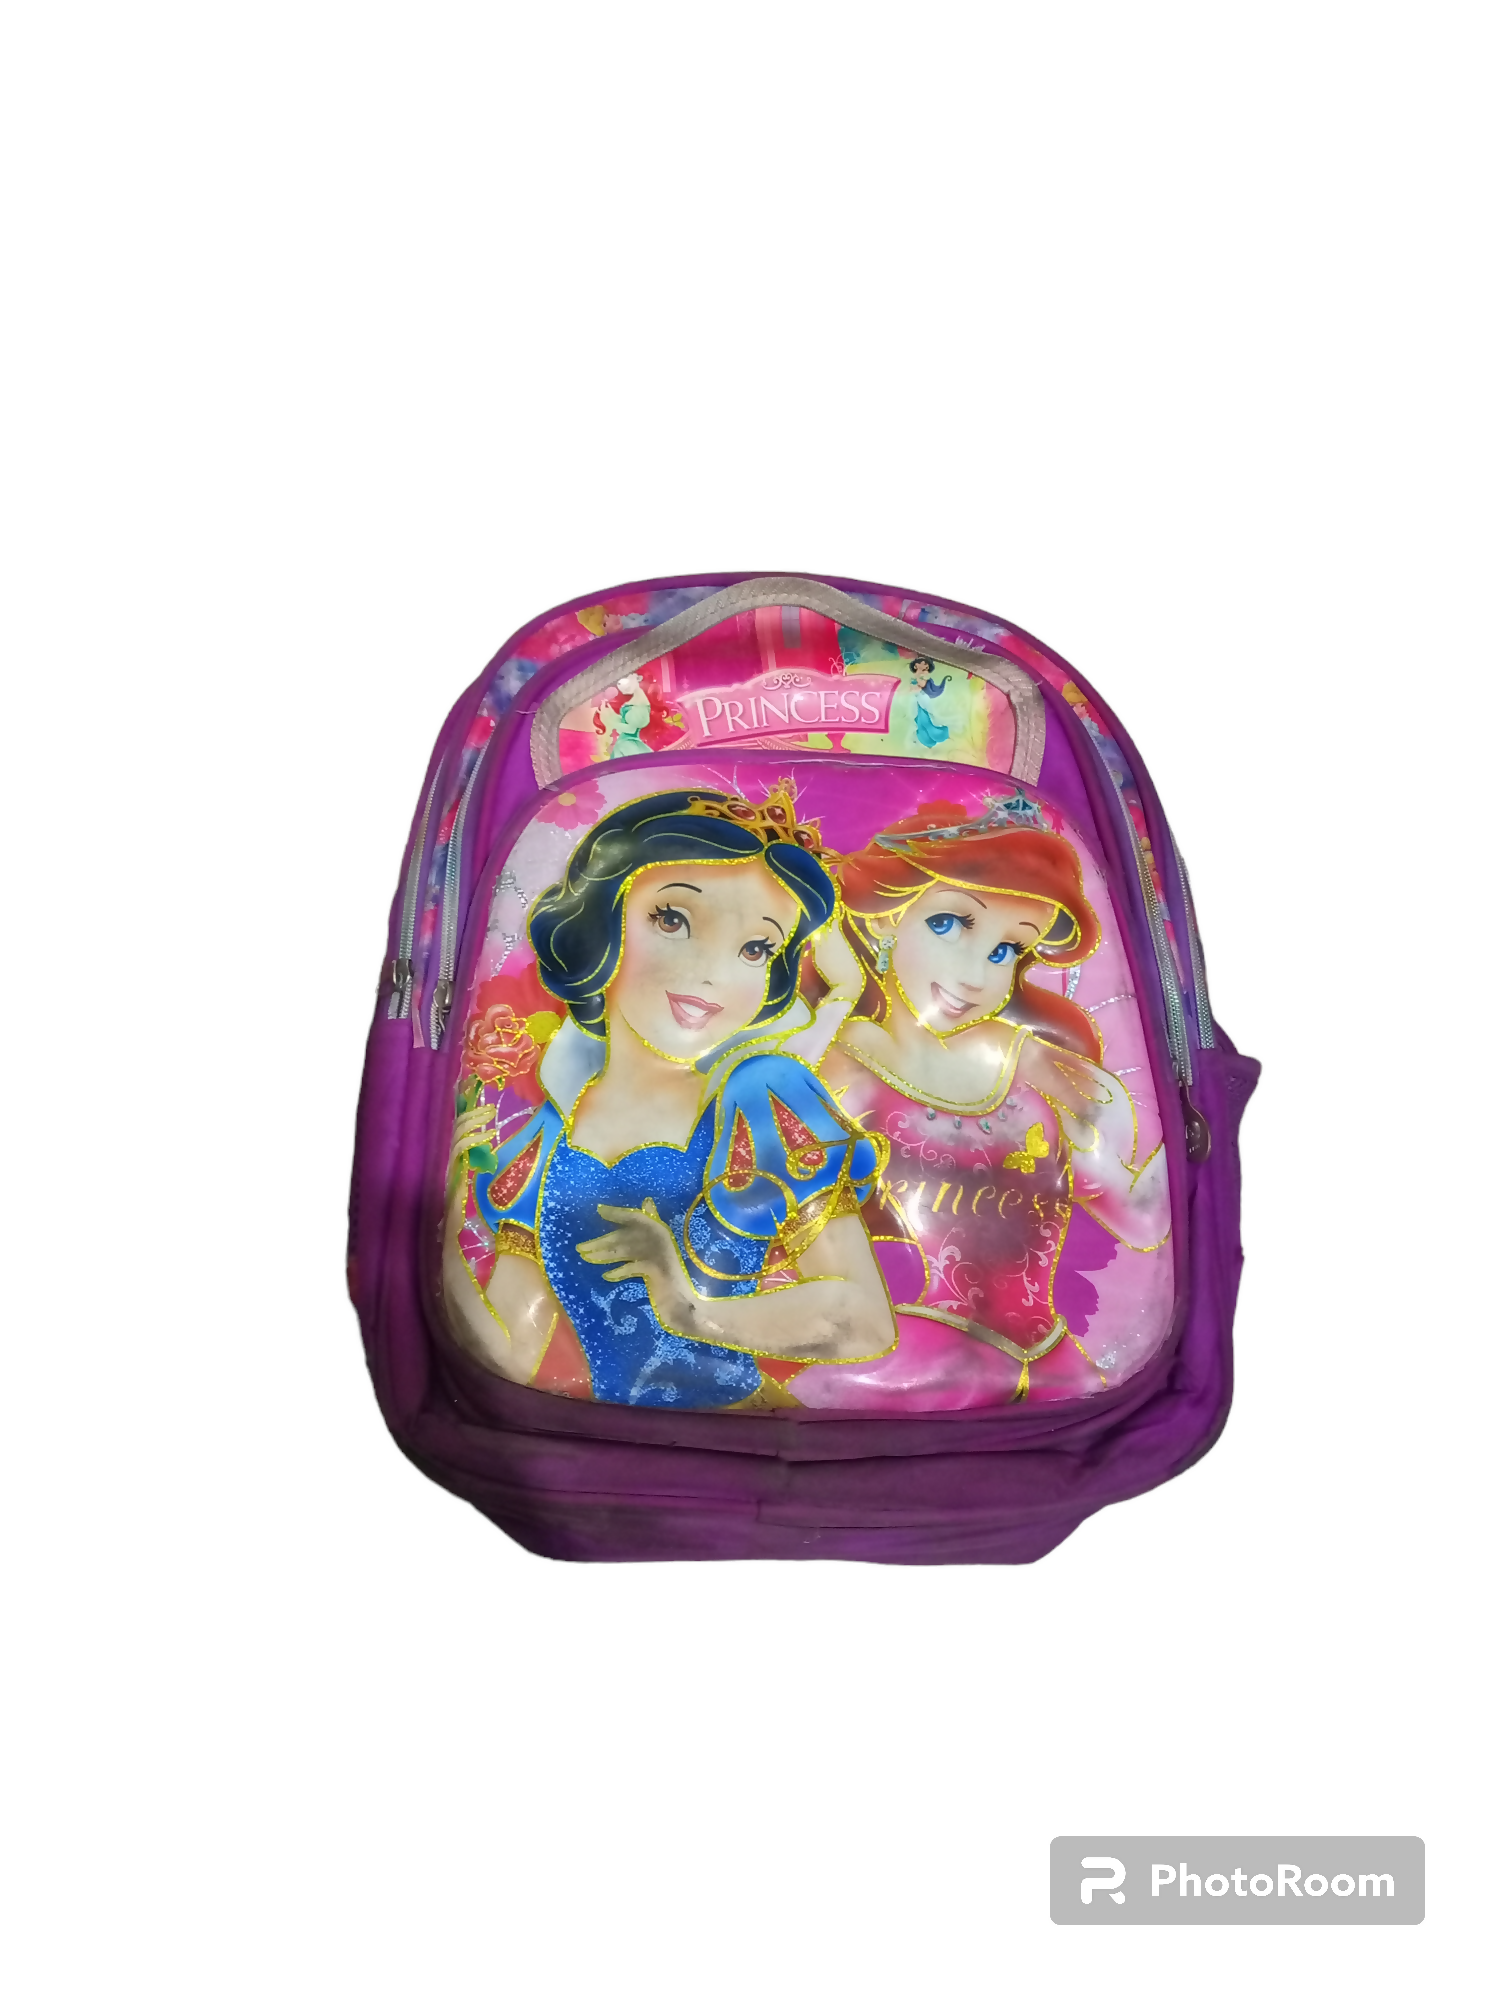 School bag for girls | School Bags & Accessories | Preloved